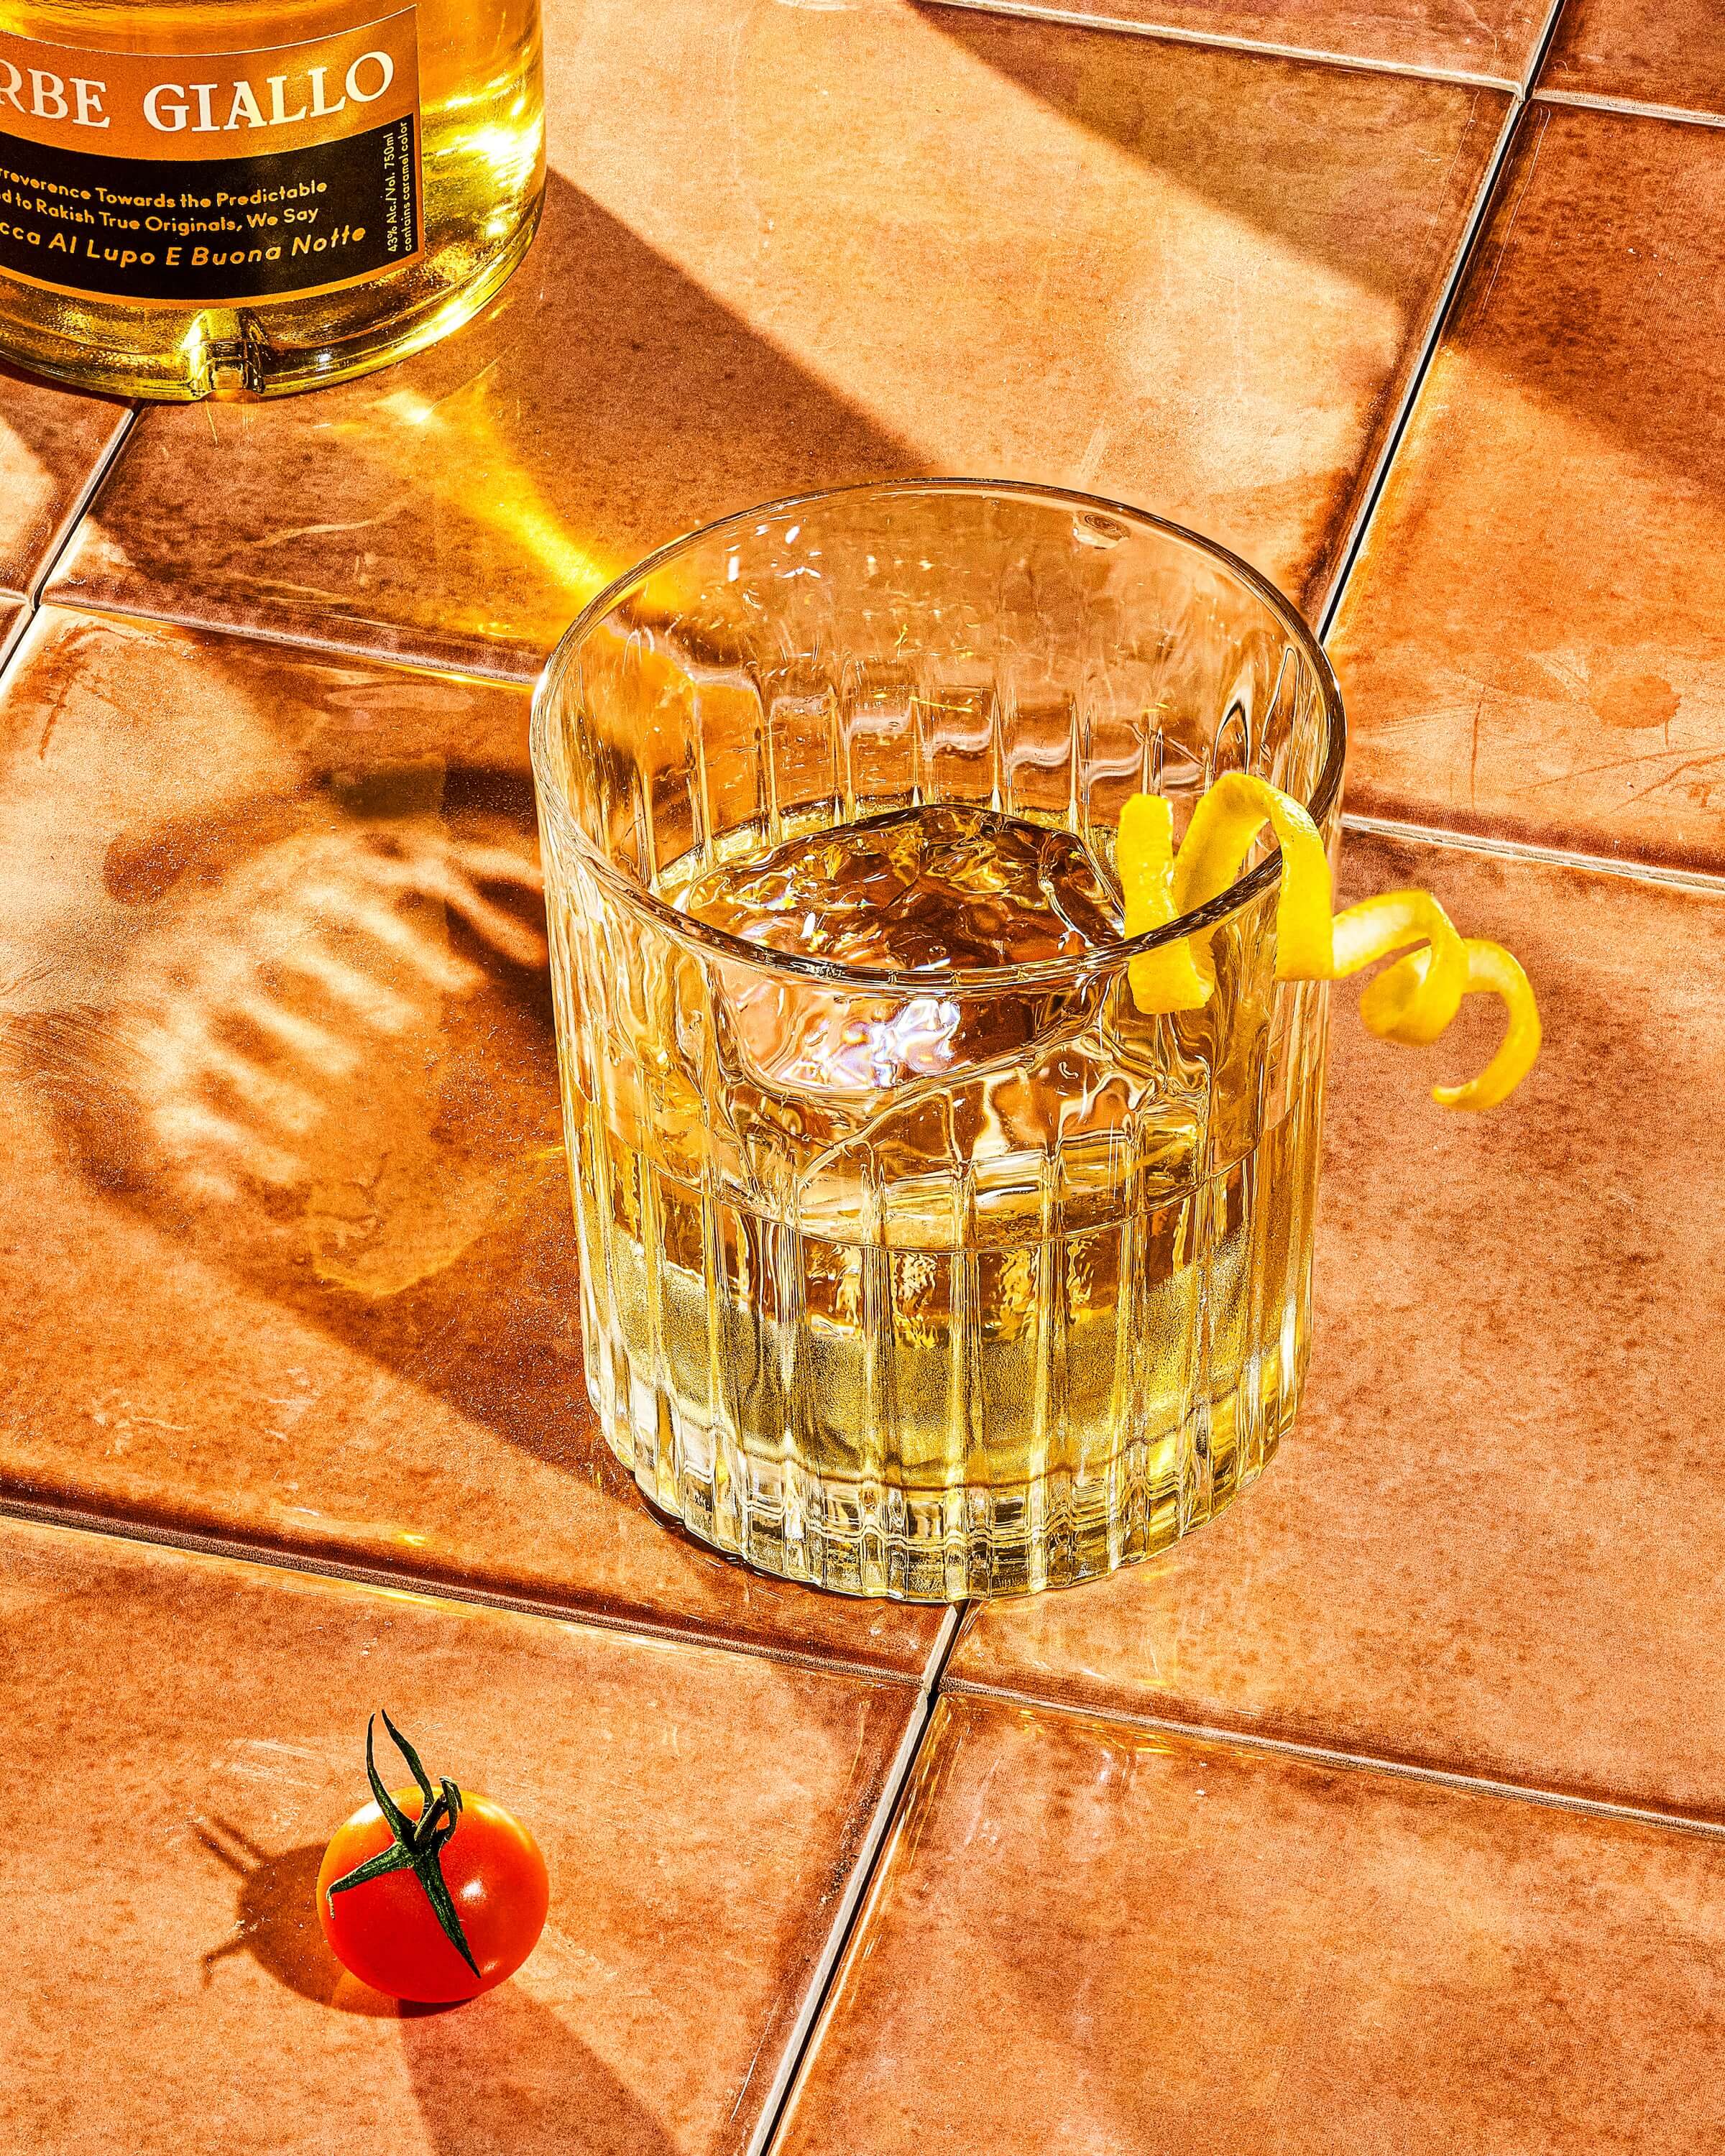 Glass with lemon peel  and Faccia Brutto Centerbe Giallo bottle on terra cotta tile